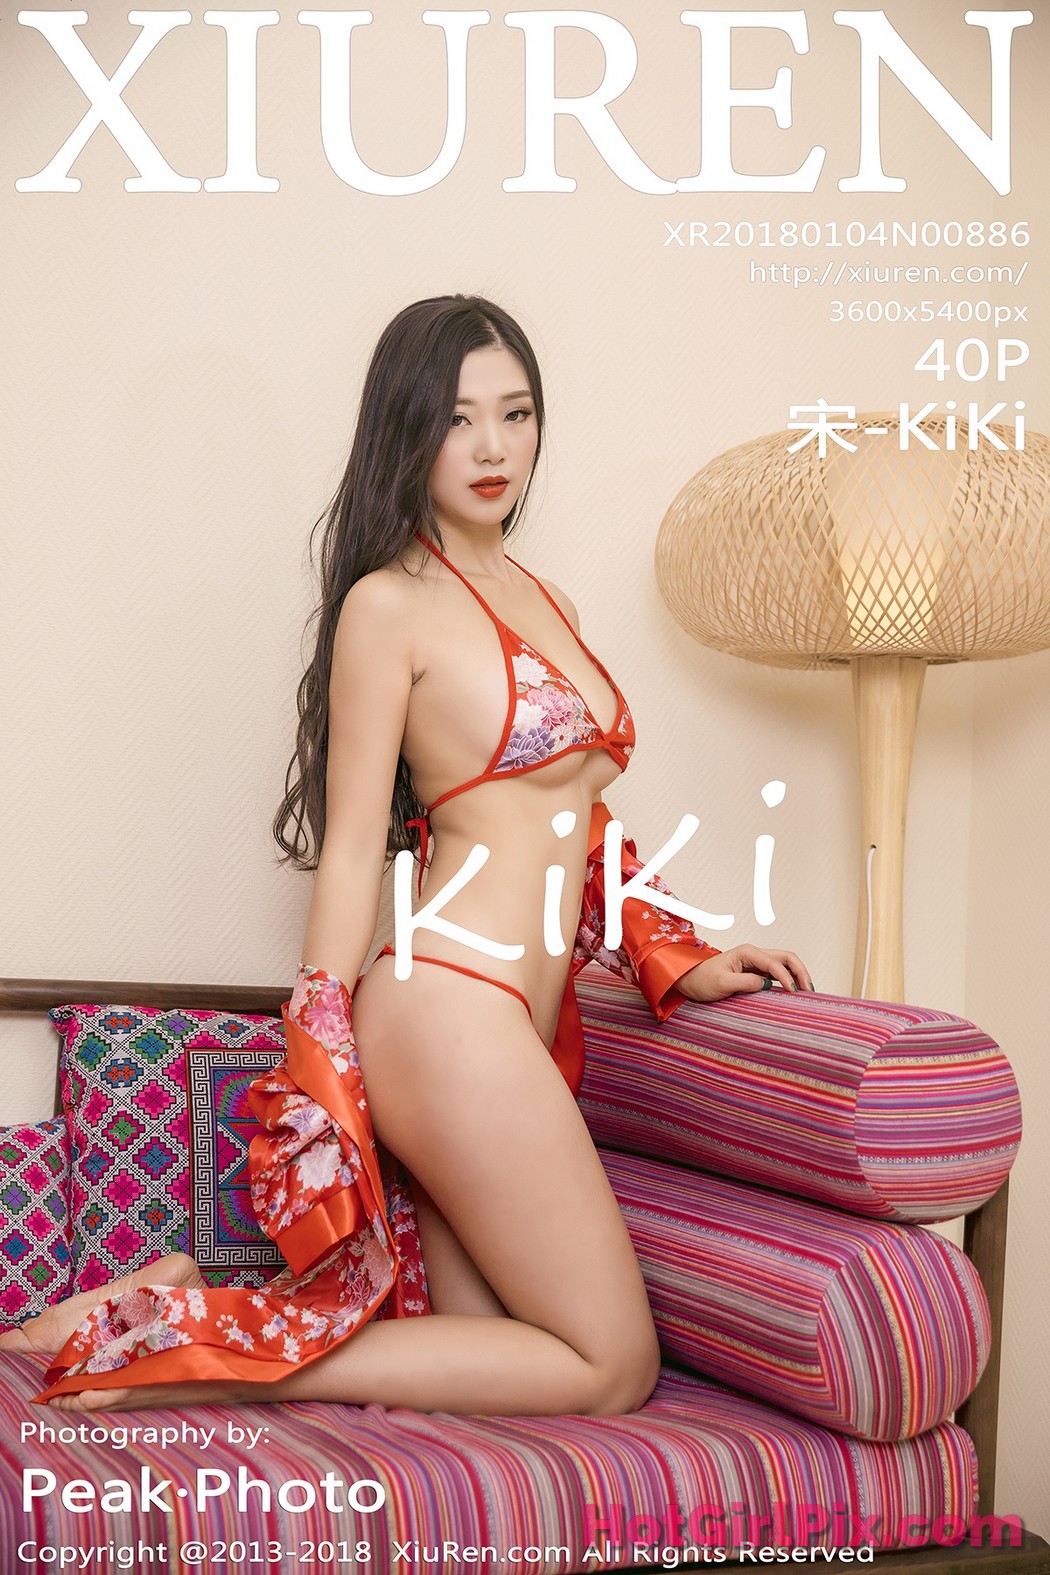 [XIUREN] No.886 宋-KiKi Cover Photo